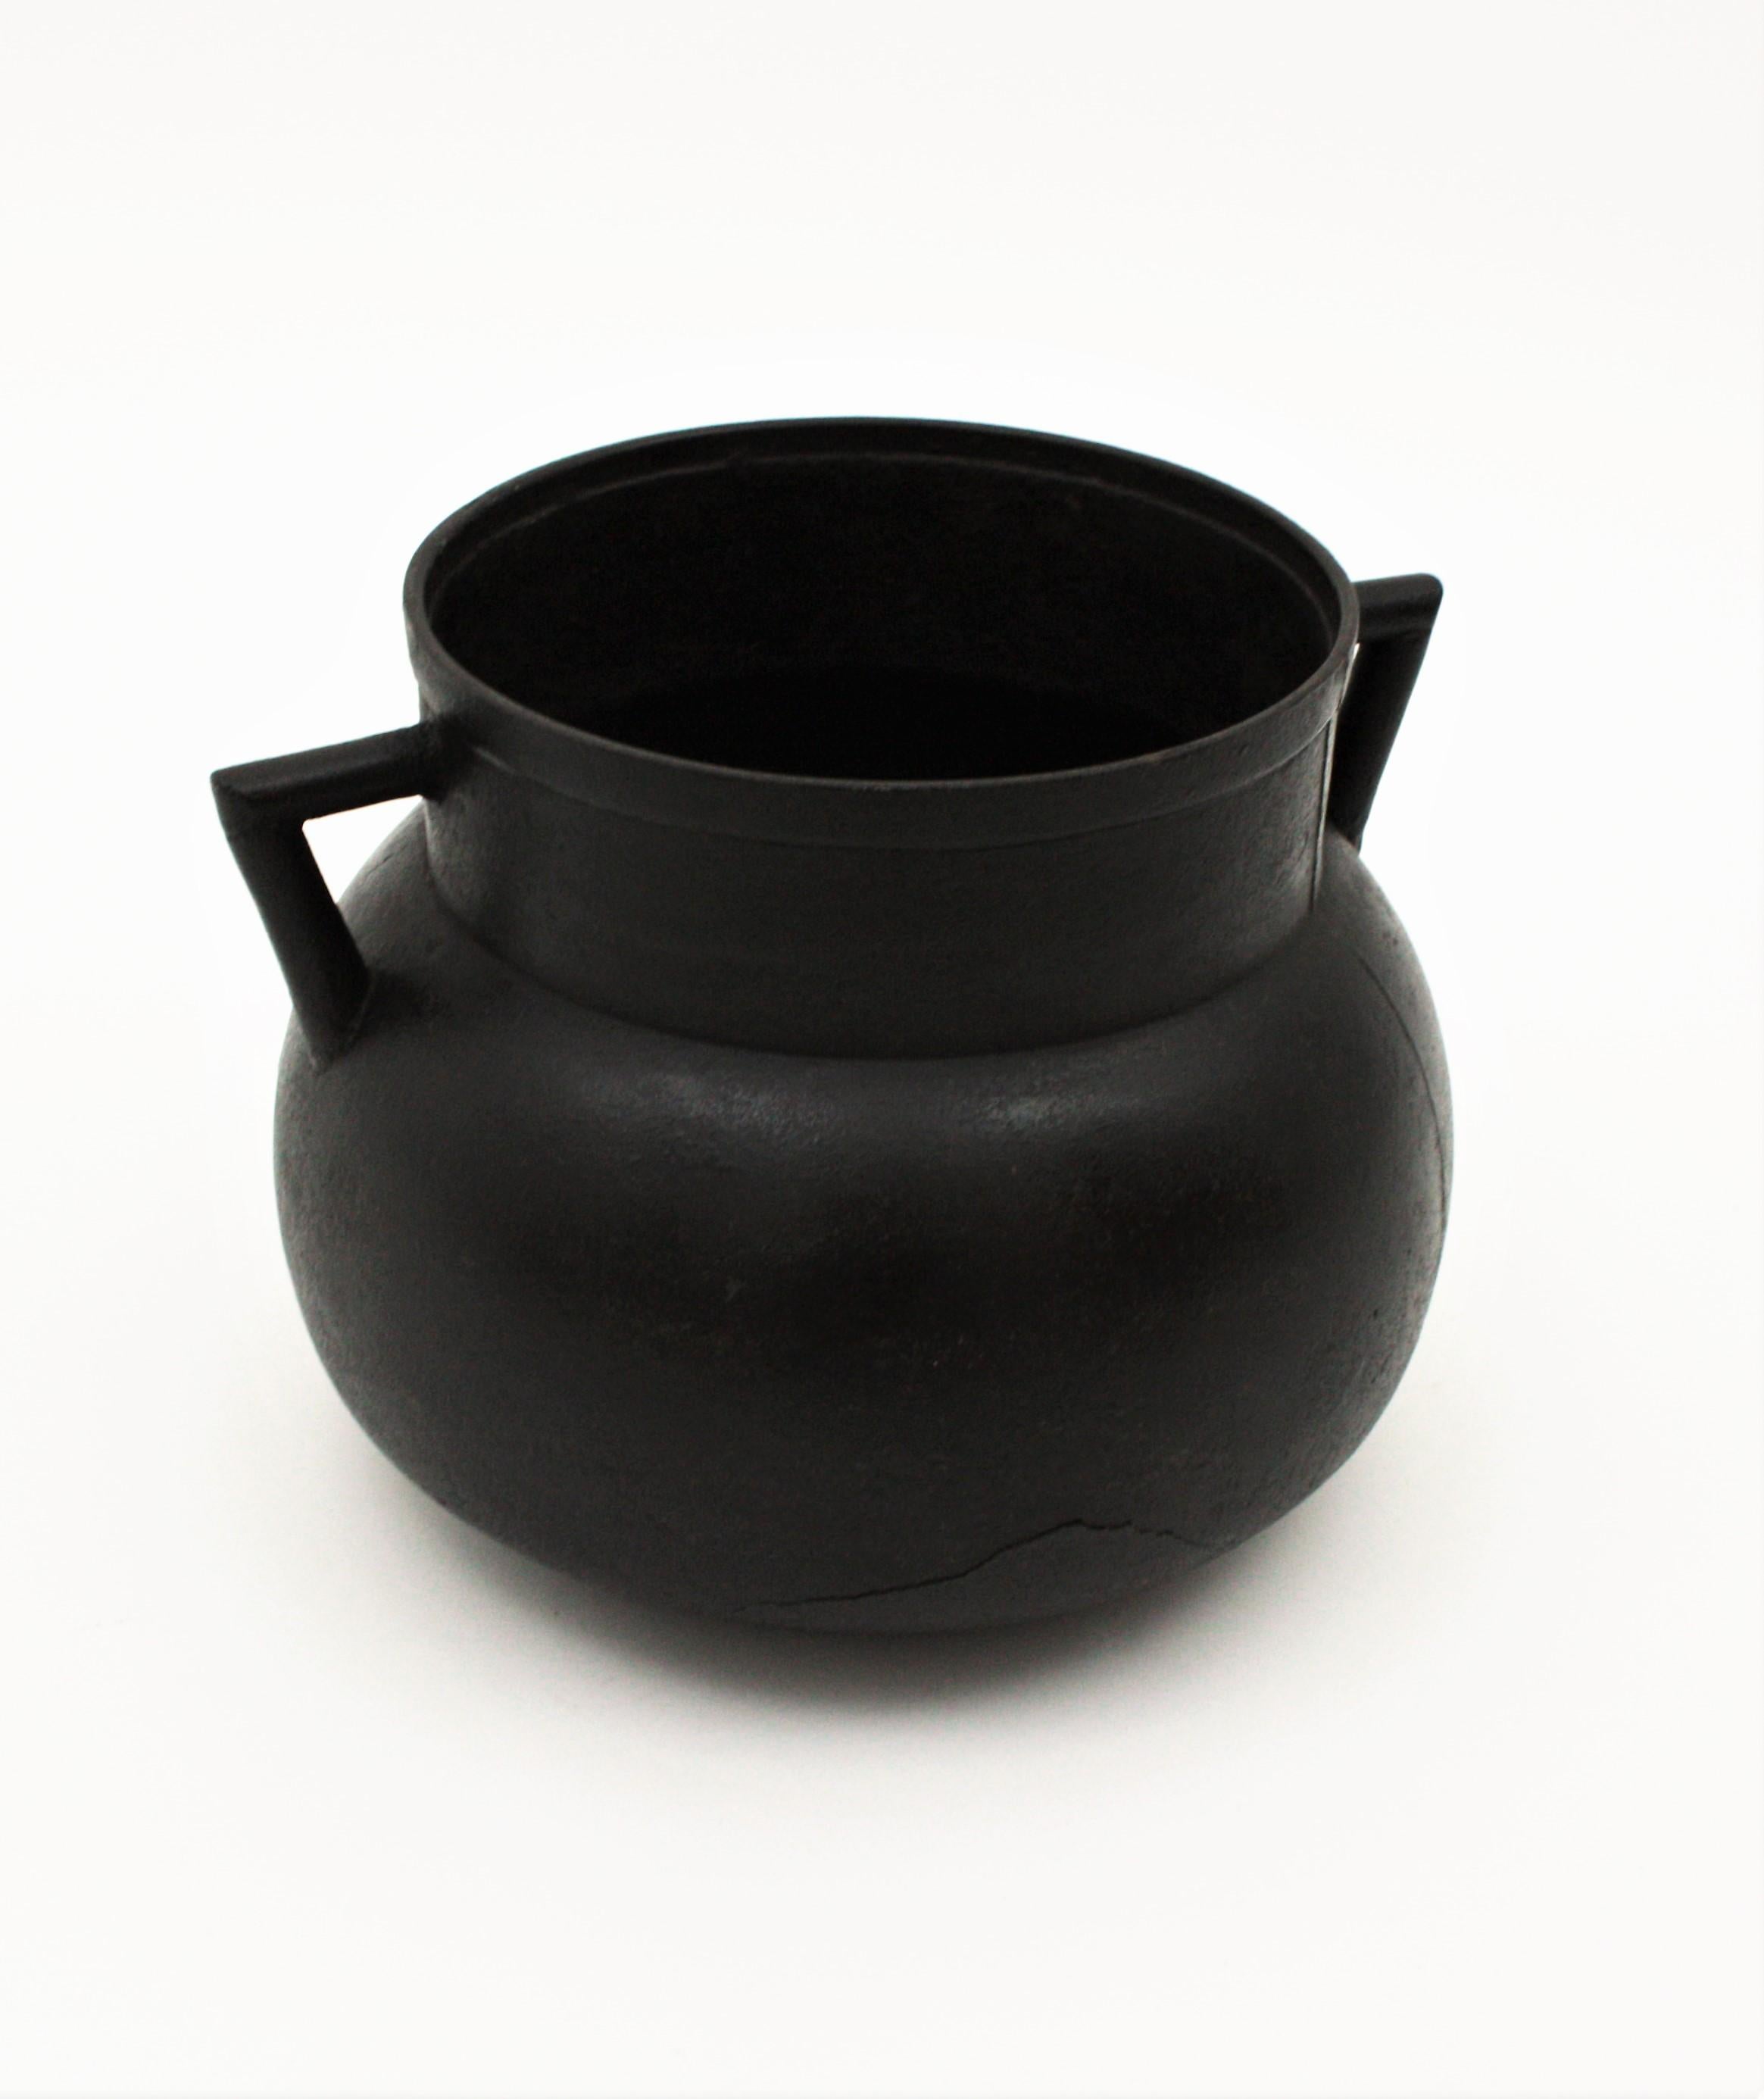 Rustic Spanish Cast Iron Cauldron Pot or Vessel For Sale